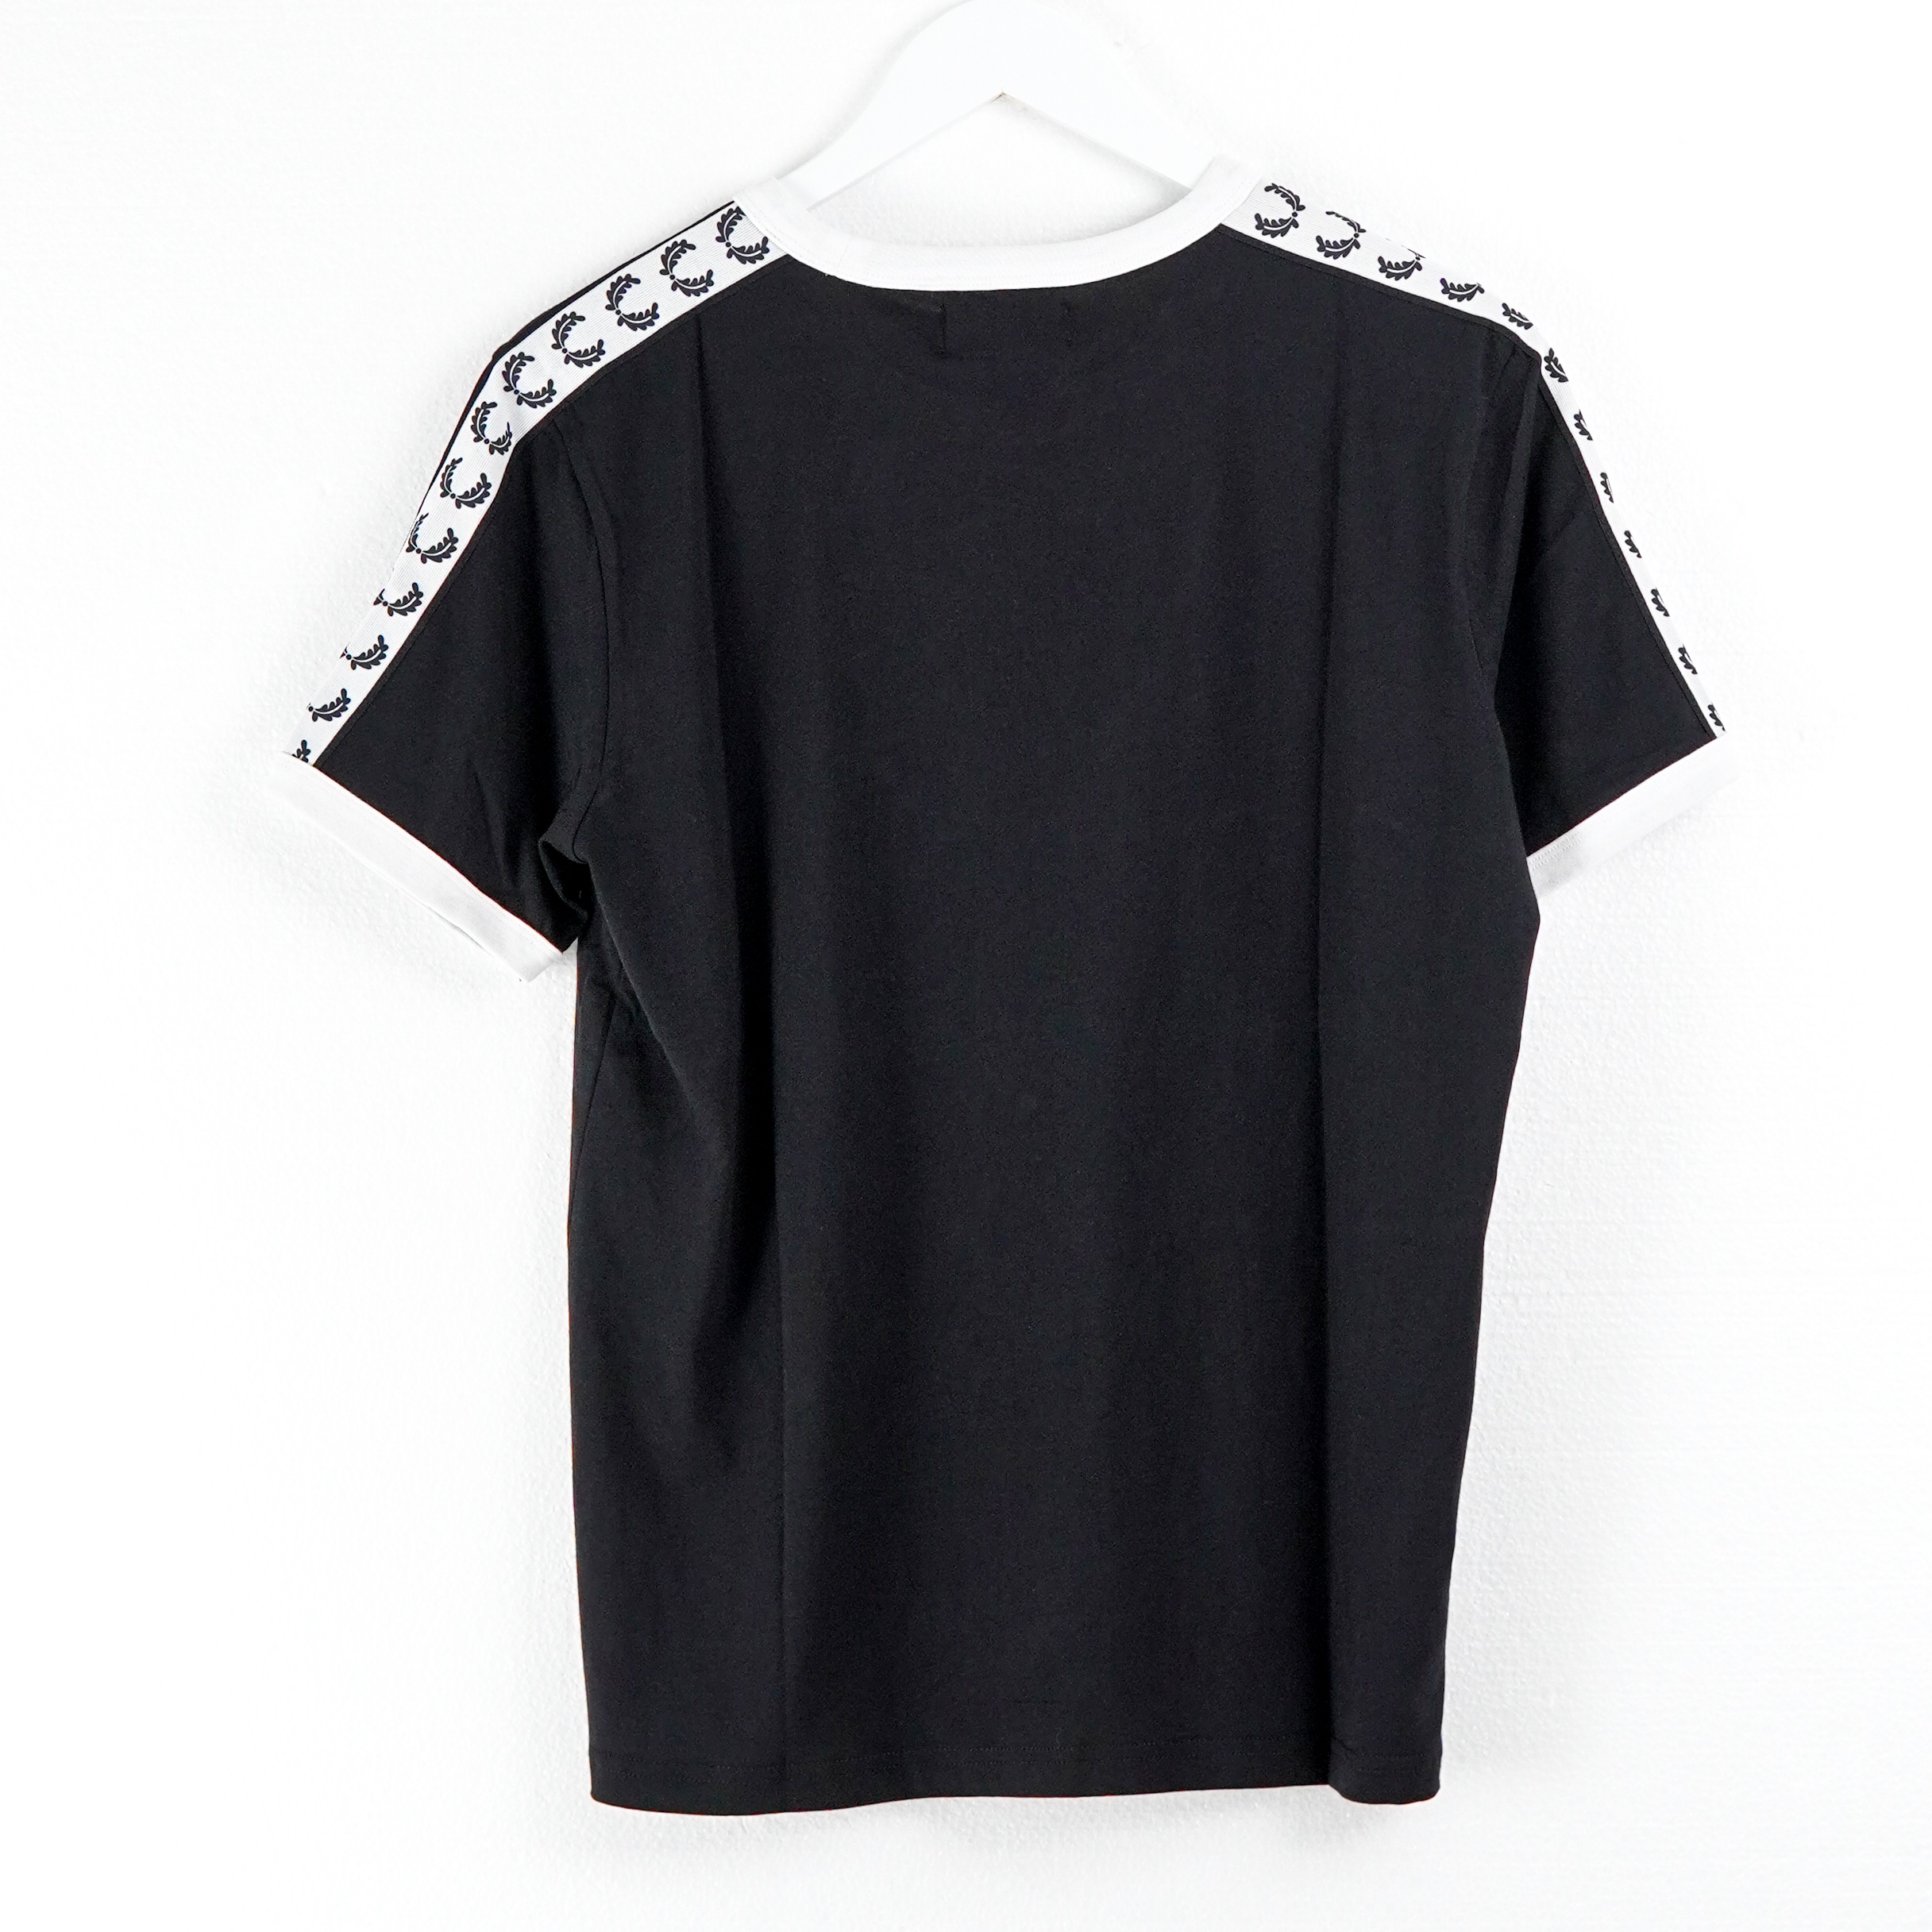 Kaos FRED PERRY STRIPE SHOULDER BLACK Tshirt 100% ORIGINAL - HYPESNEAKER.ID